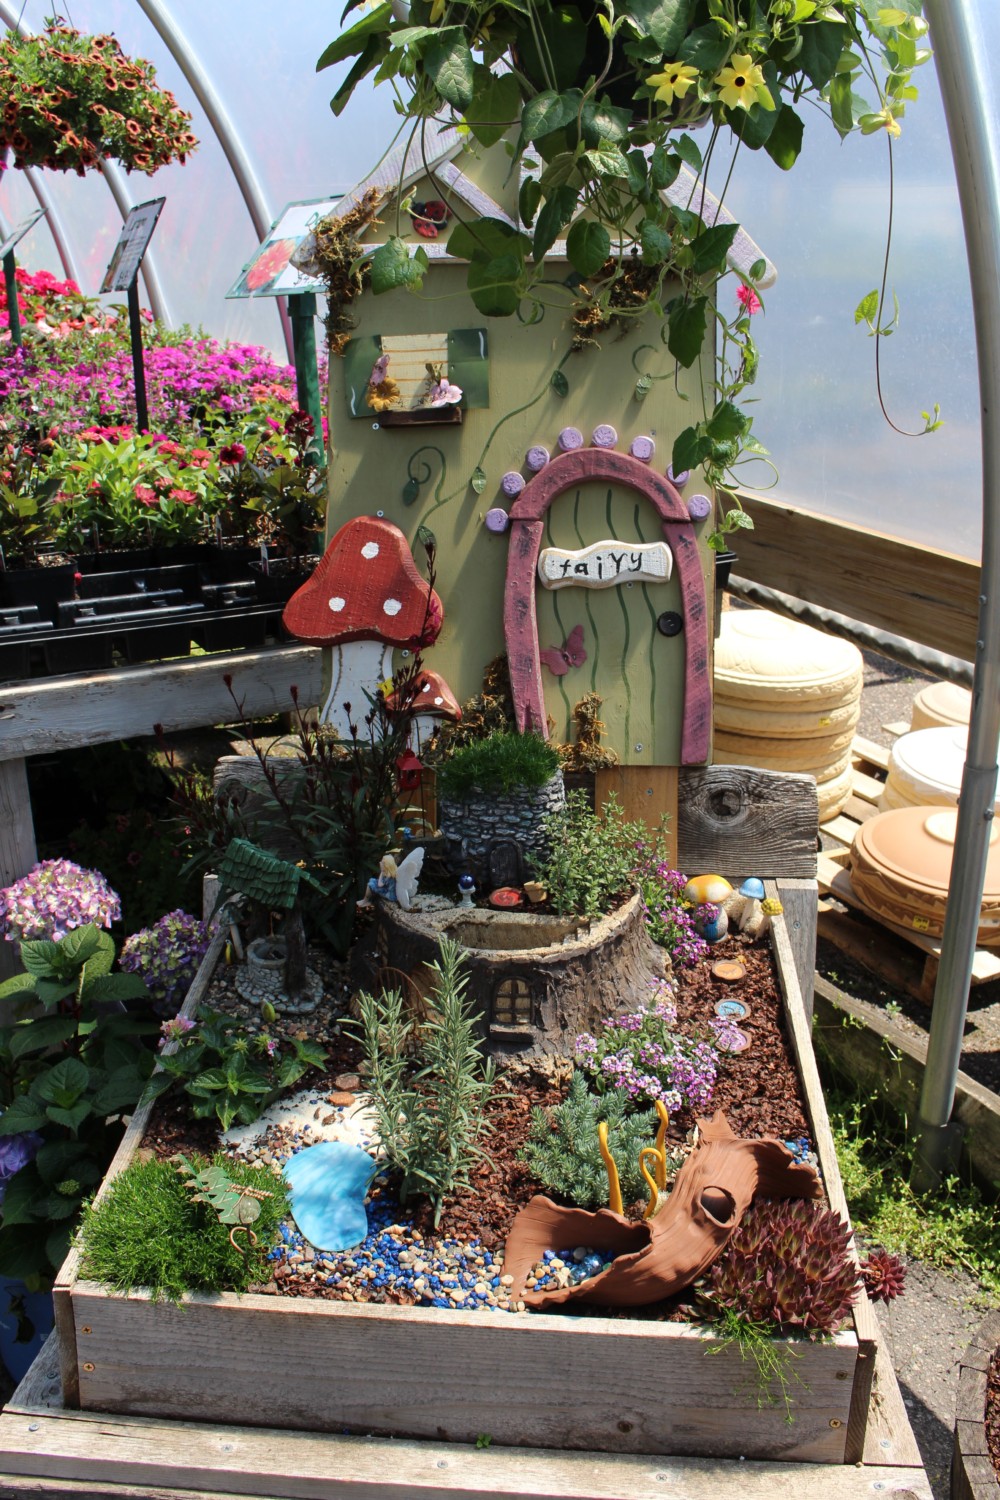 Miniature Terrarium Lawn Garden Retailer